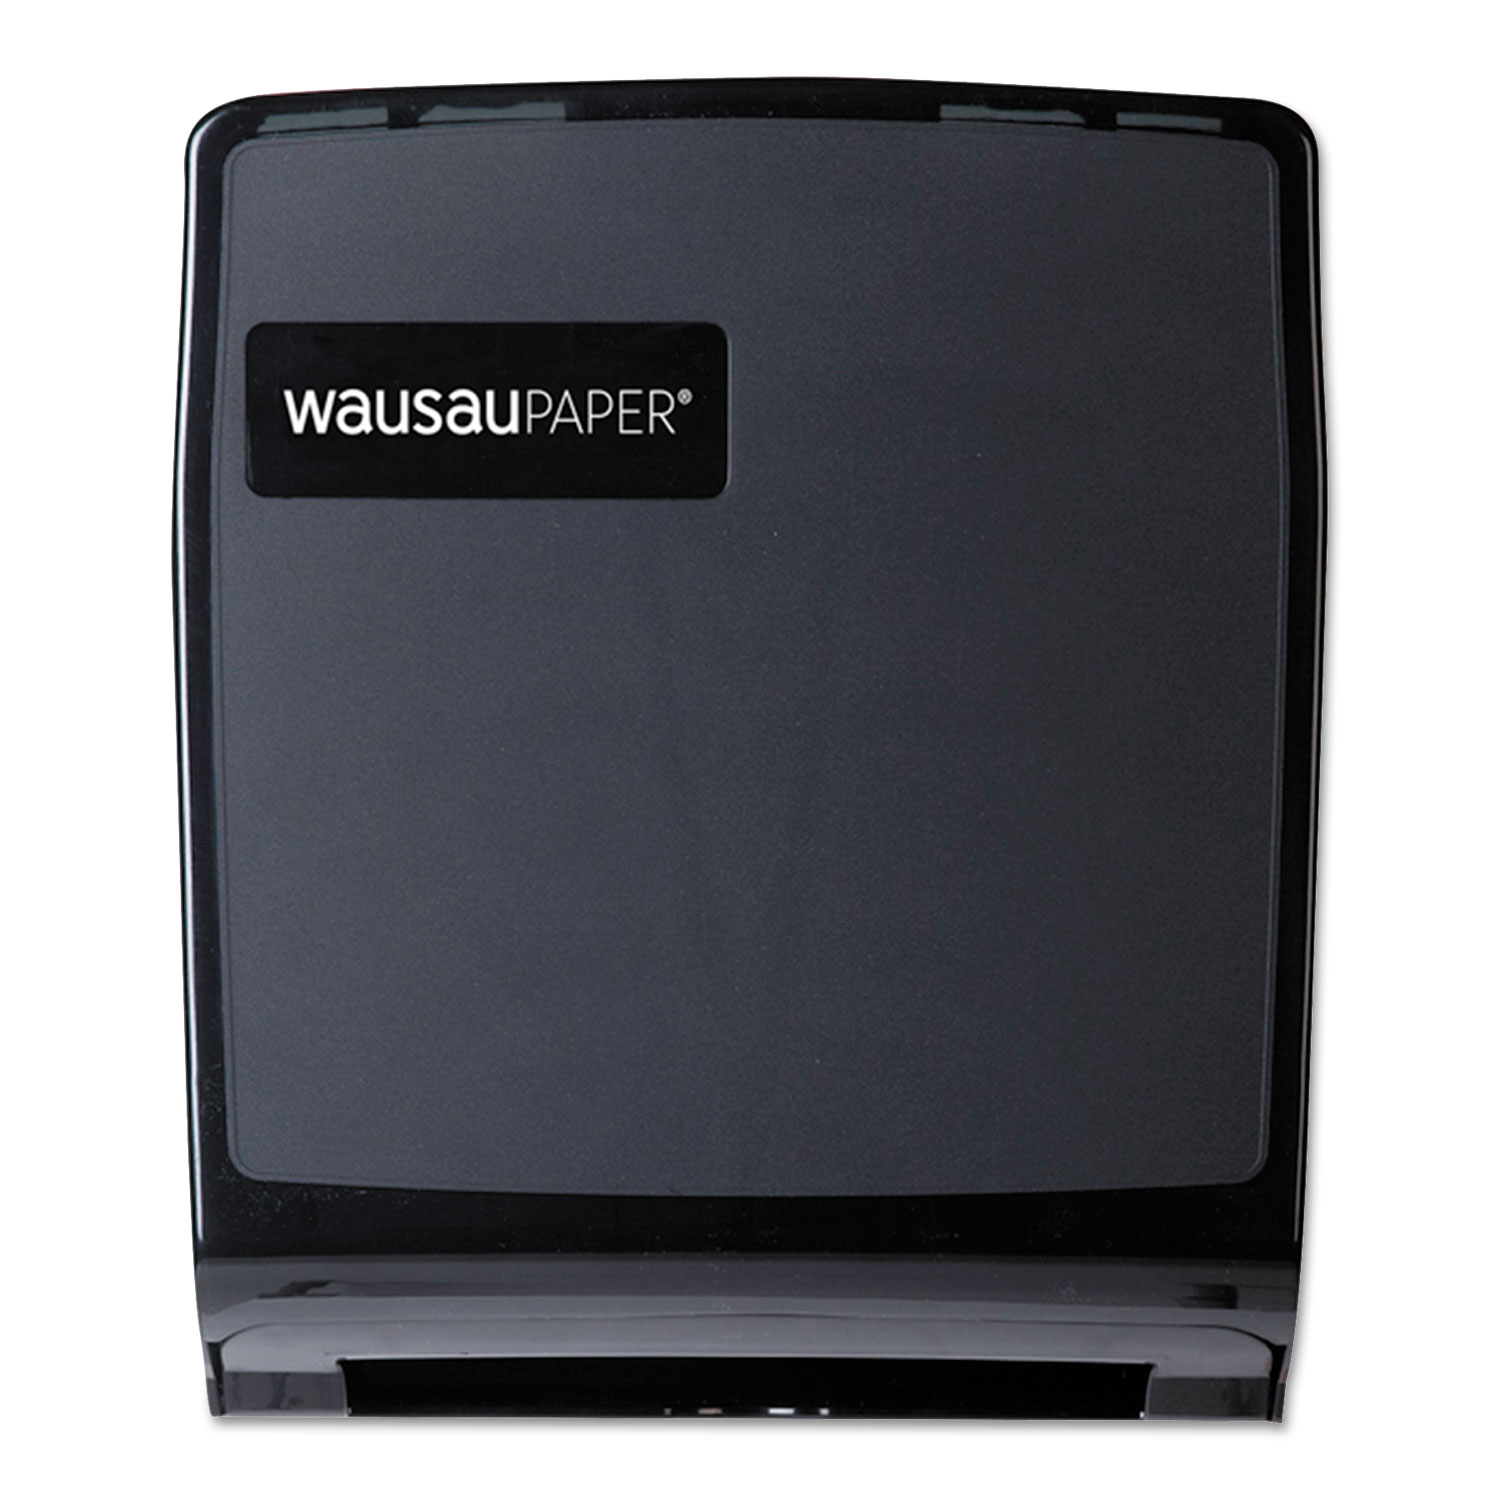  Wausau Paper WP53800 Silhouette Folded Towel Dispenser, 8 1/2 x 10.4375 x 3 7/8, Black/Translucent (TRK53800) 